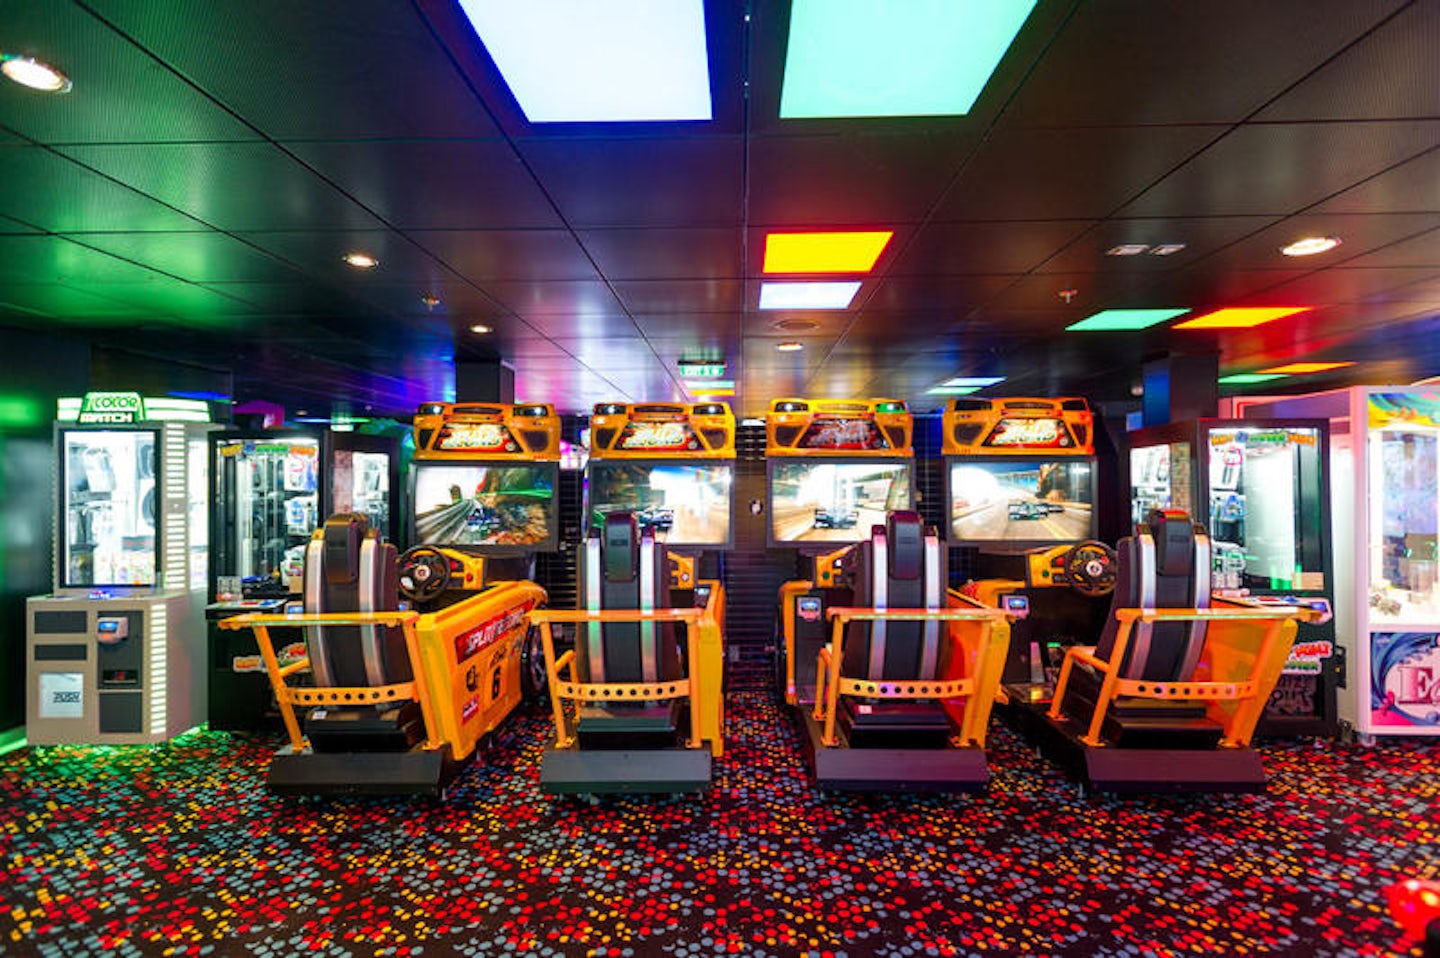 Video Arcade on Symphony of the Seas